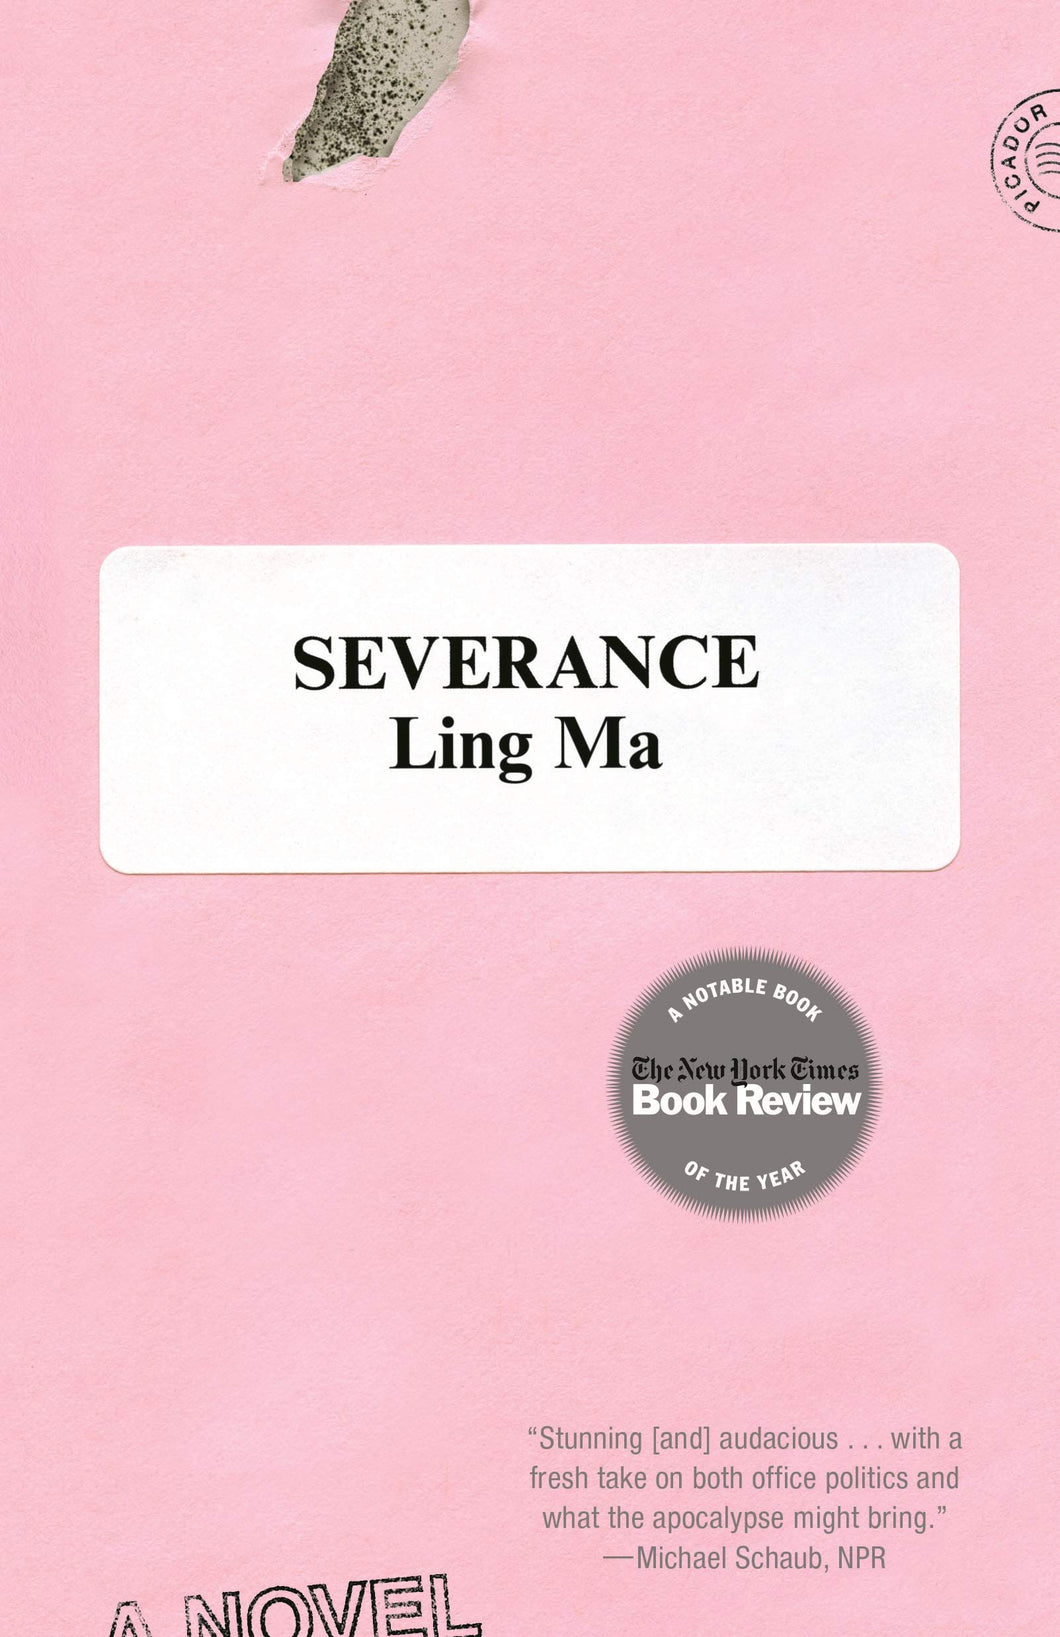 Severance: A Novel by Ling Ma